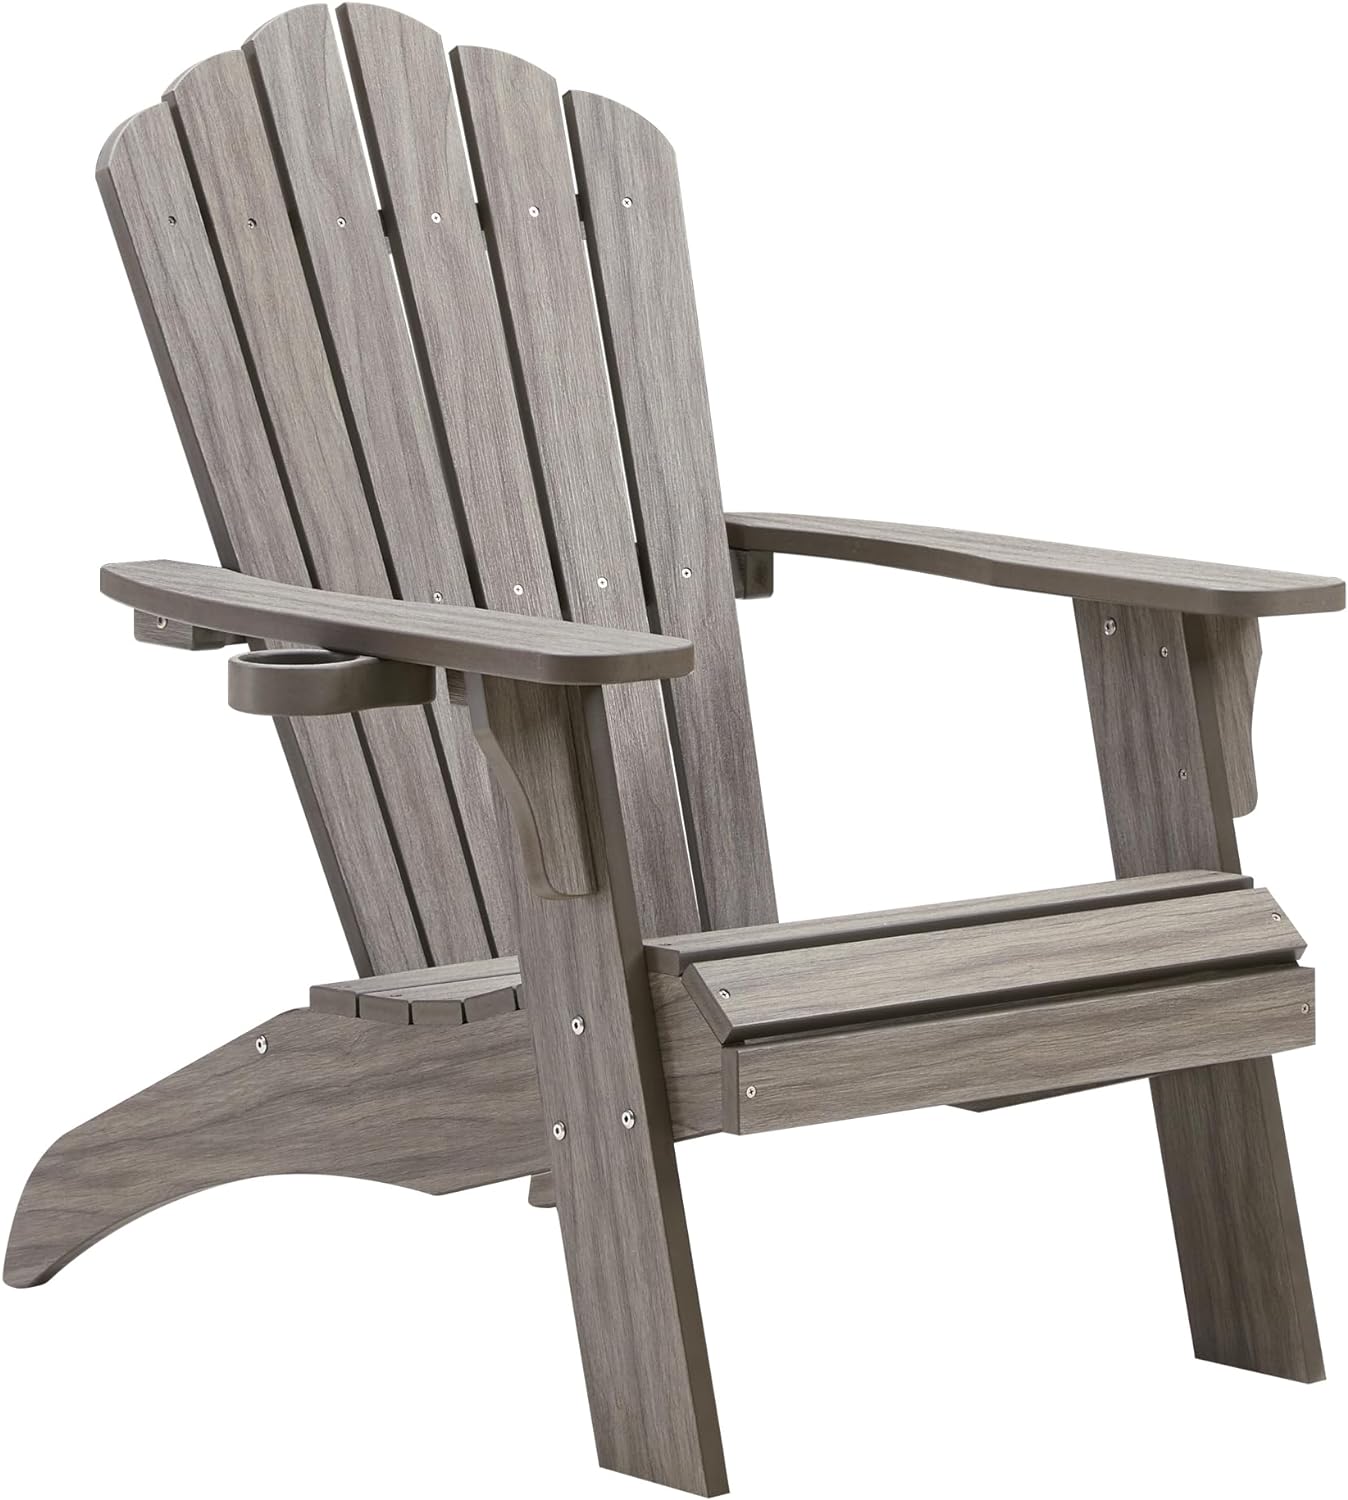 Psilvam Poly Lumber Adirondack Chairs